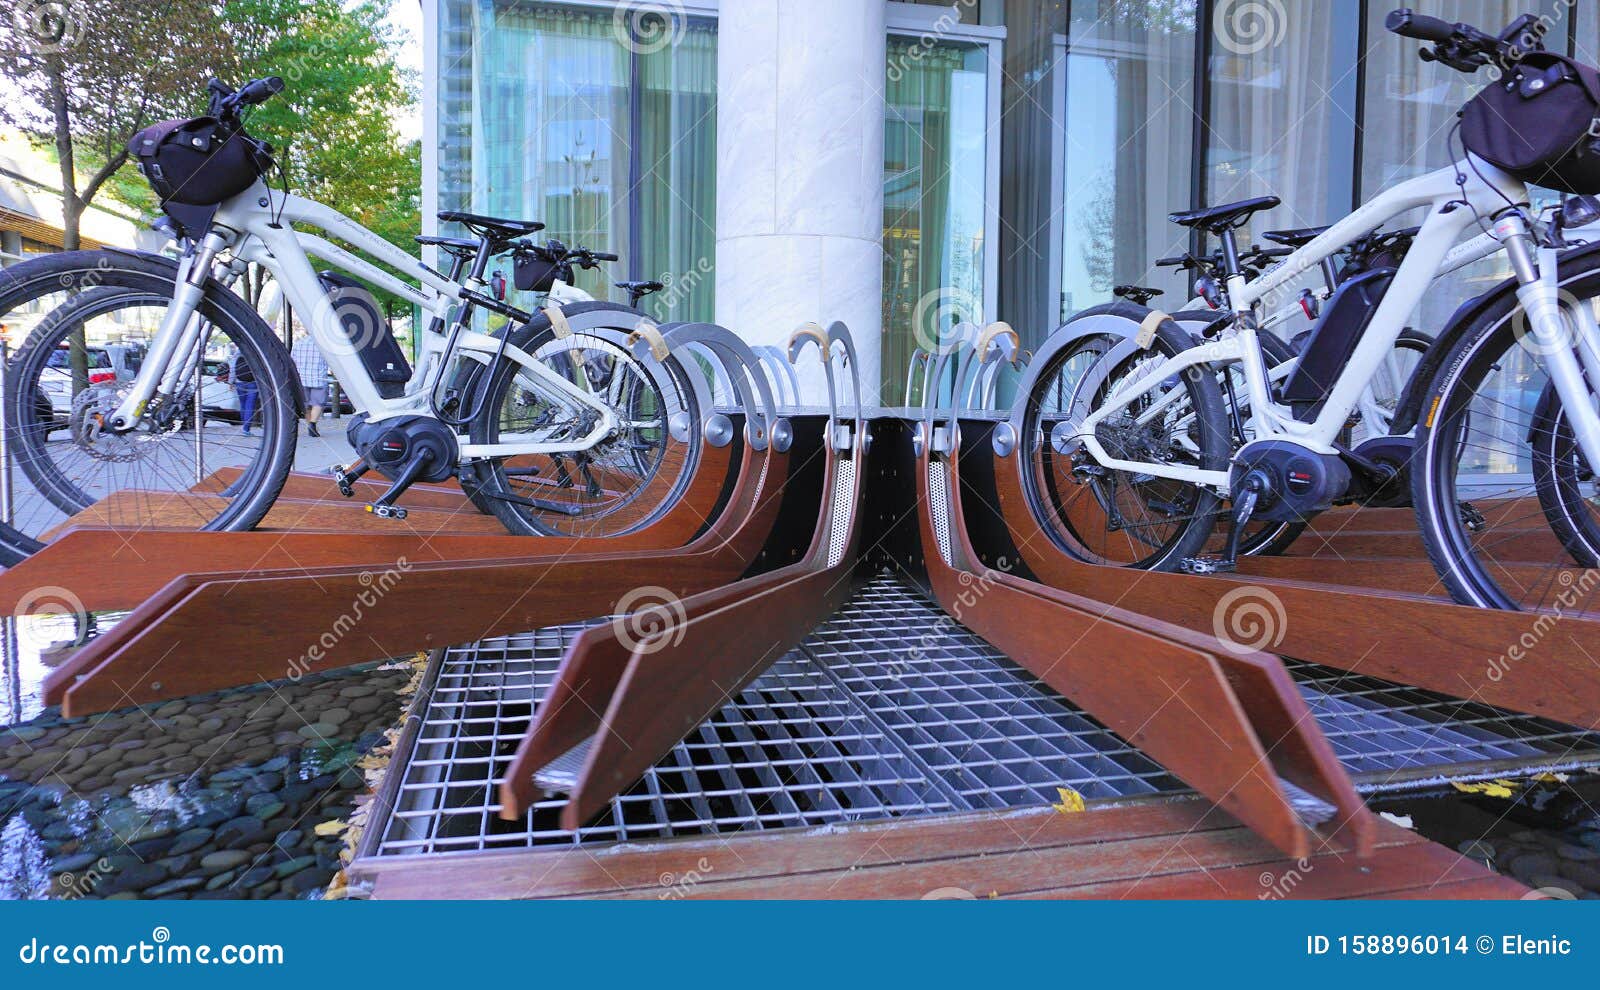 pacific bike rack